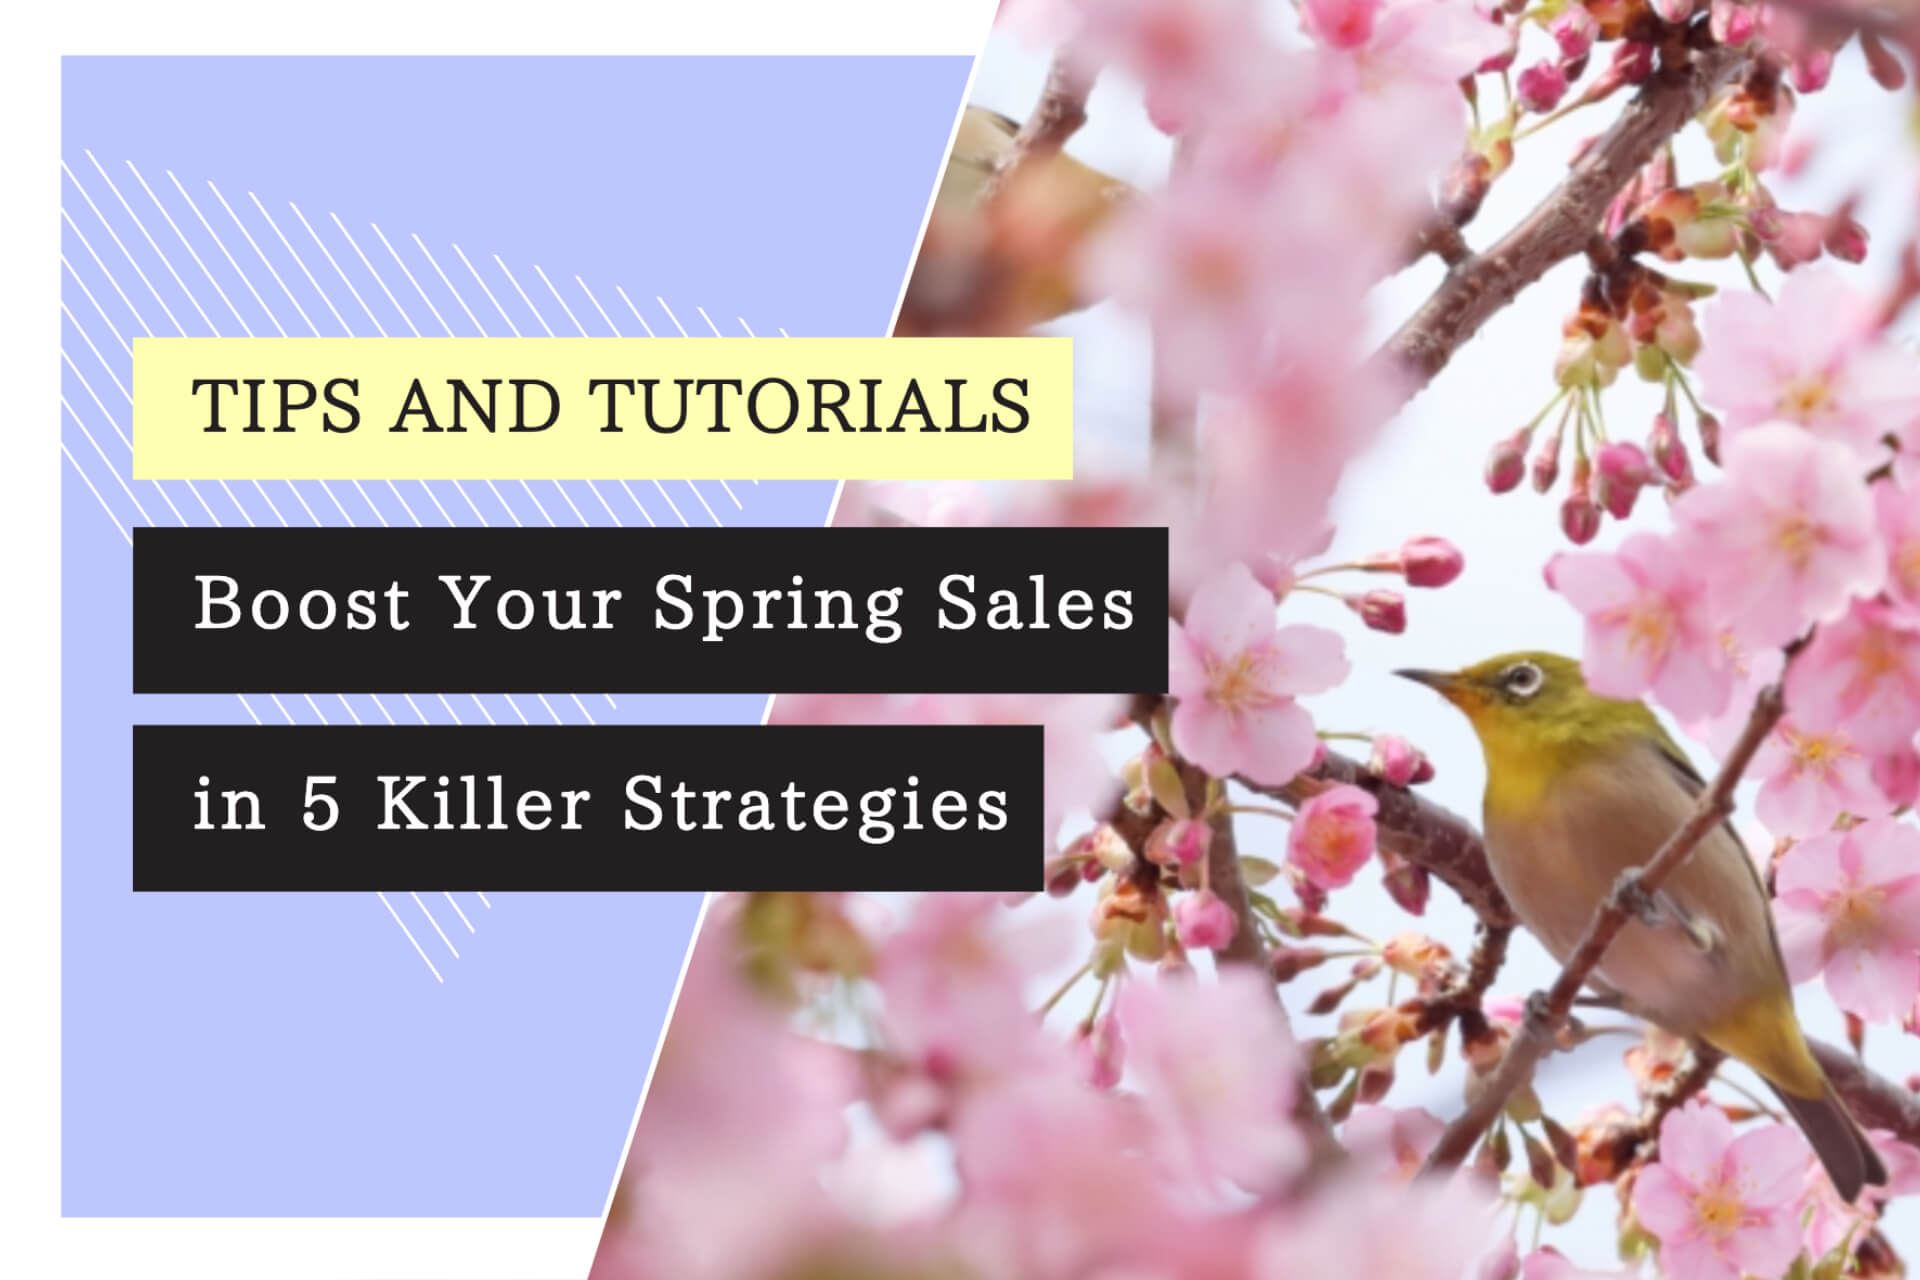 Spring Sales: Boost your spring sales in 5 killer strategies